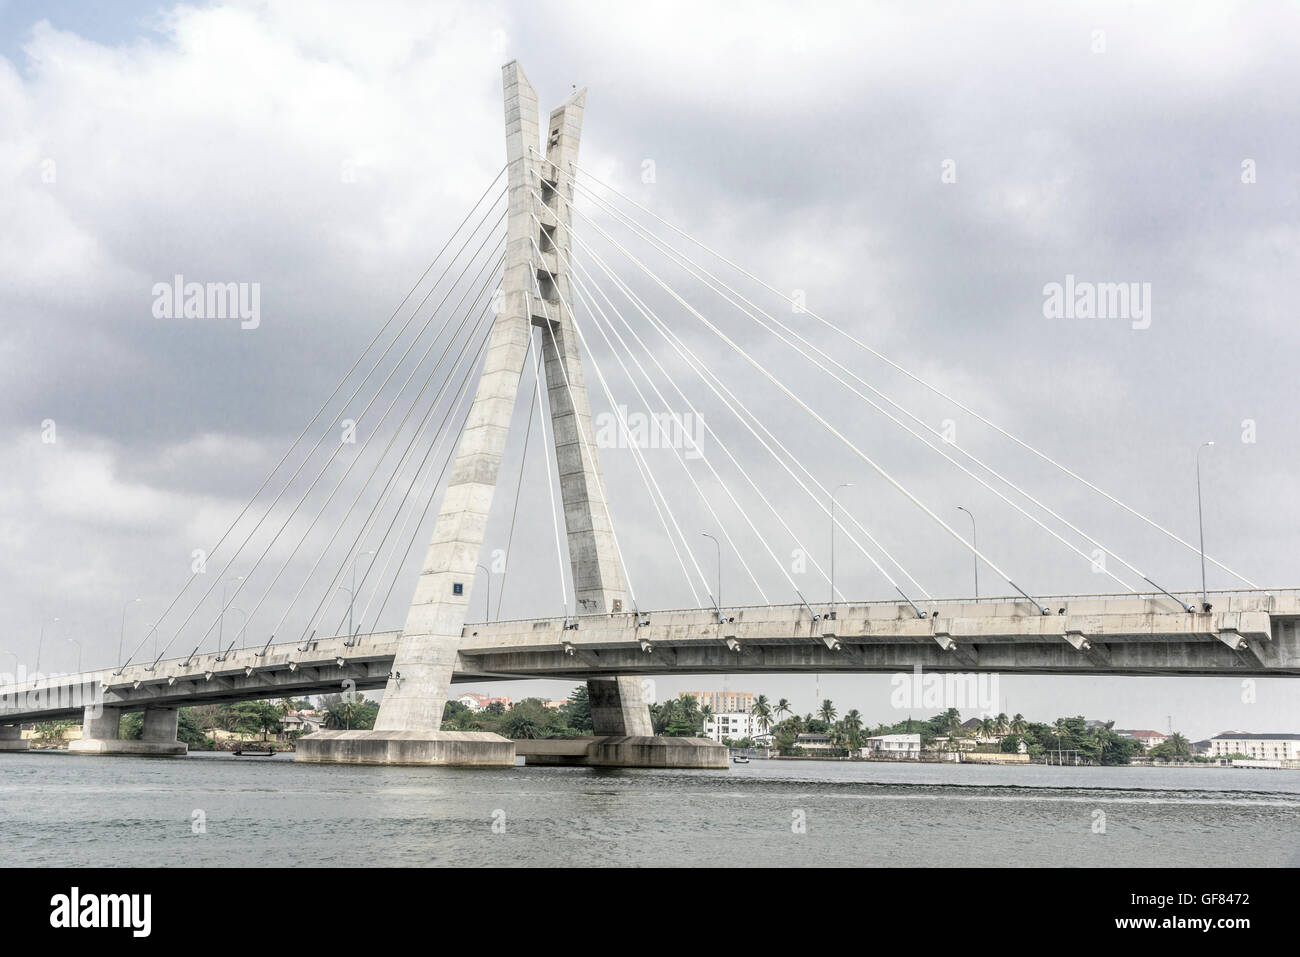 Lekki-Ikoyi Bridge, Lagos, Nigeria, West Africa Stock Photo